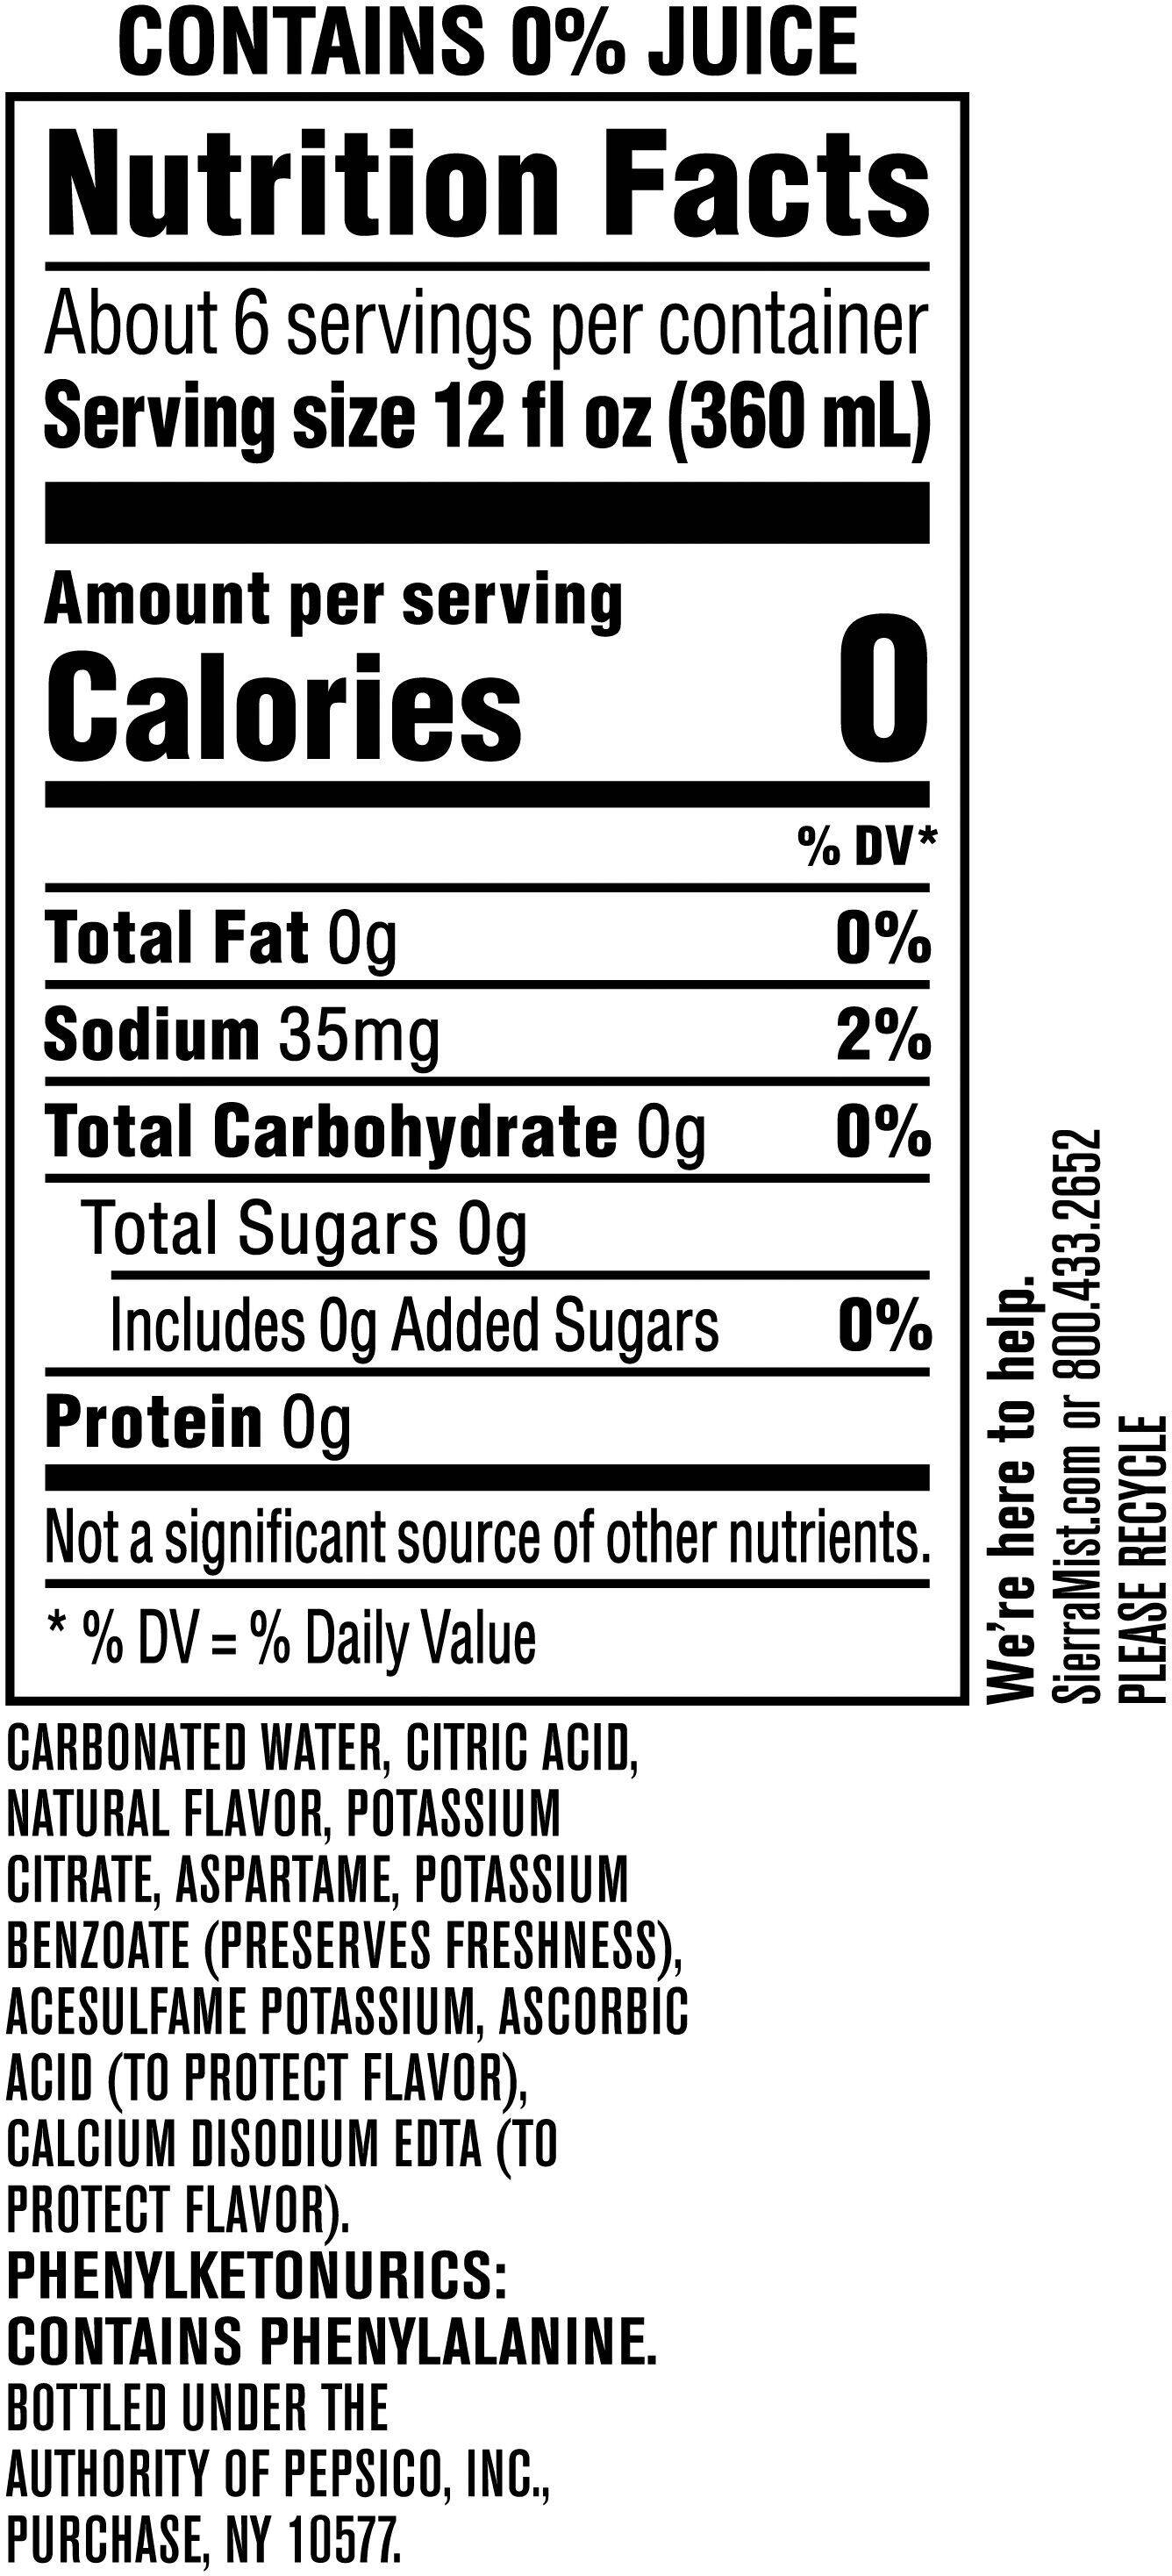 Image describing nutrition information for product Sierra Mist Zero Sugar